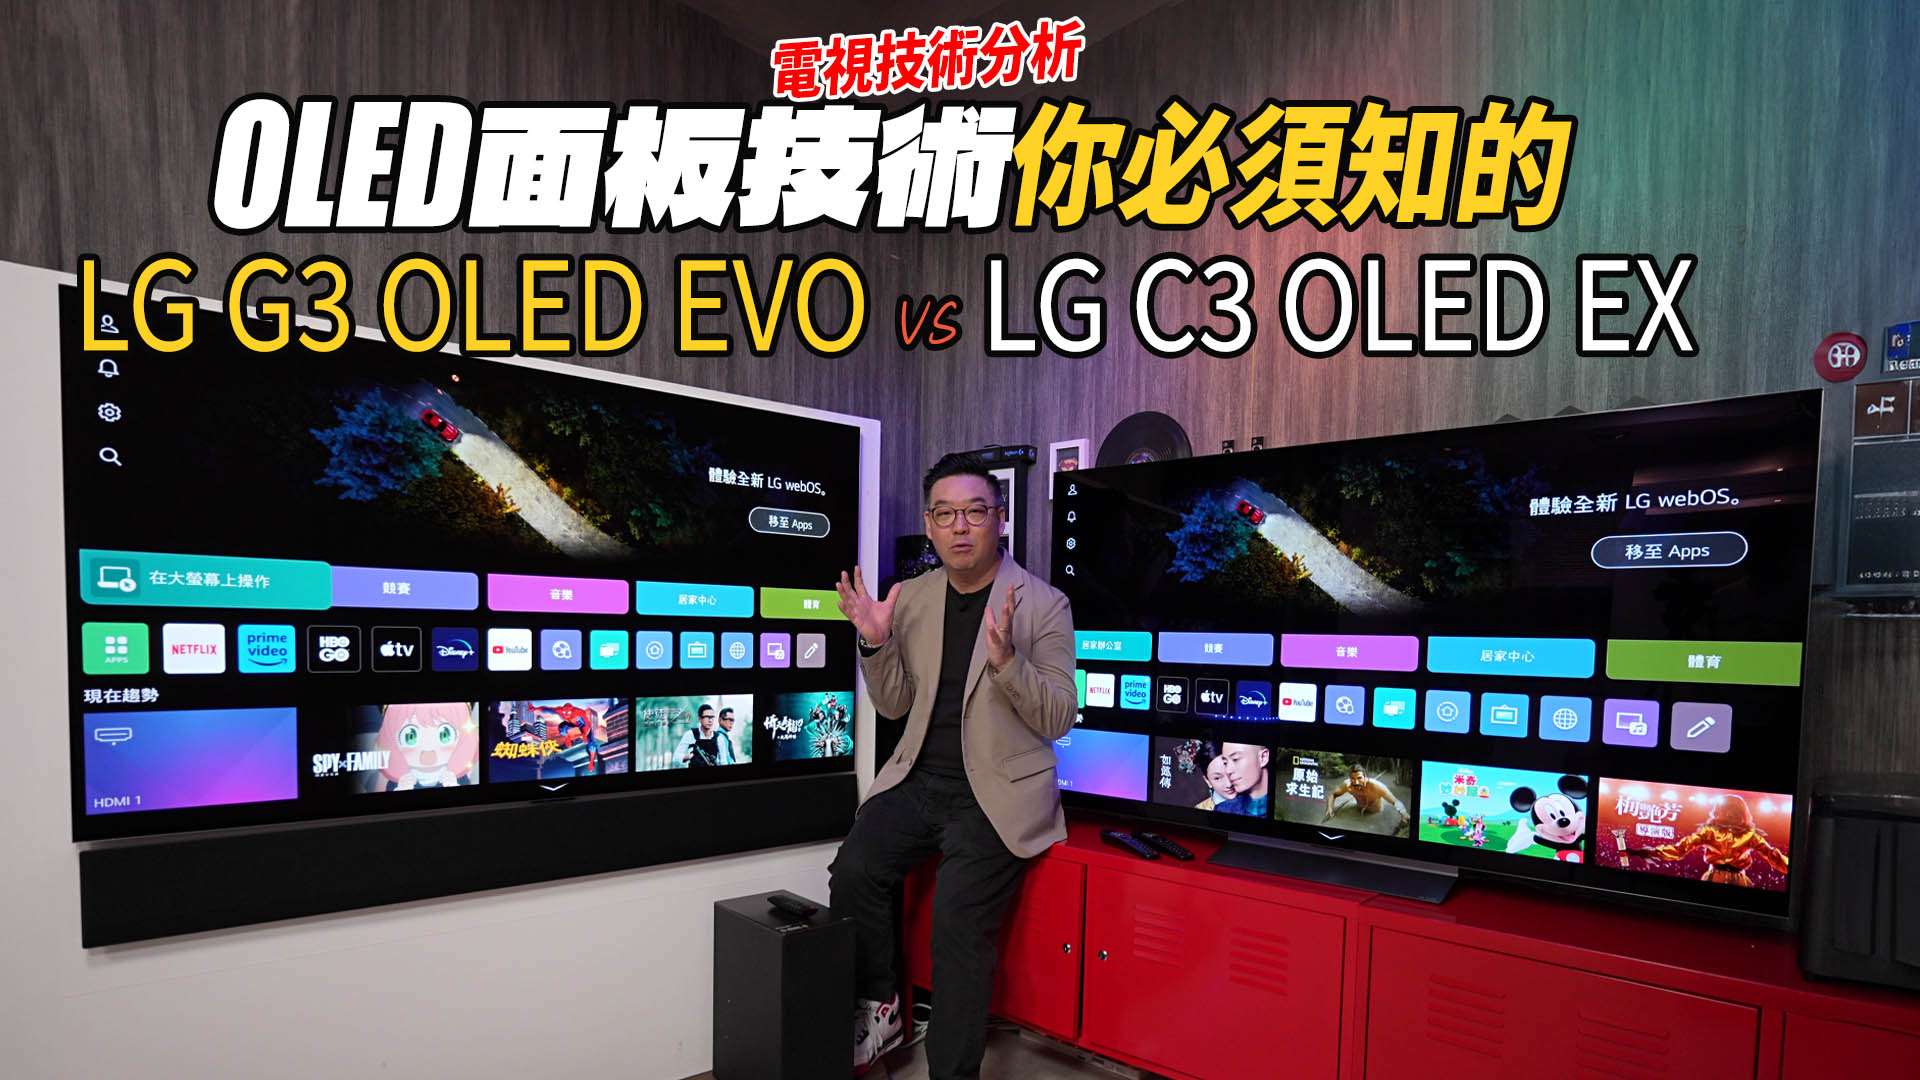 LG G3 C3 TV tech talk forum.jpg